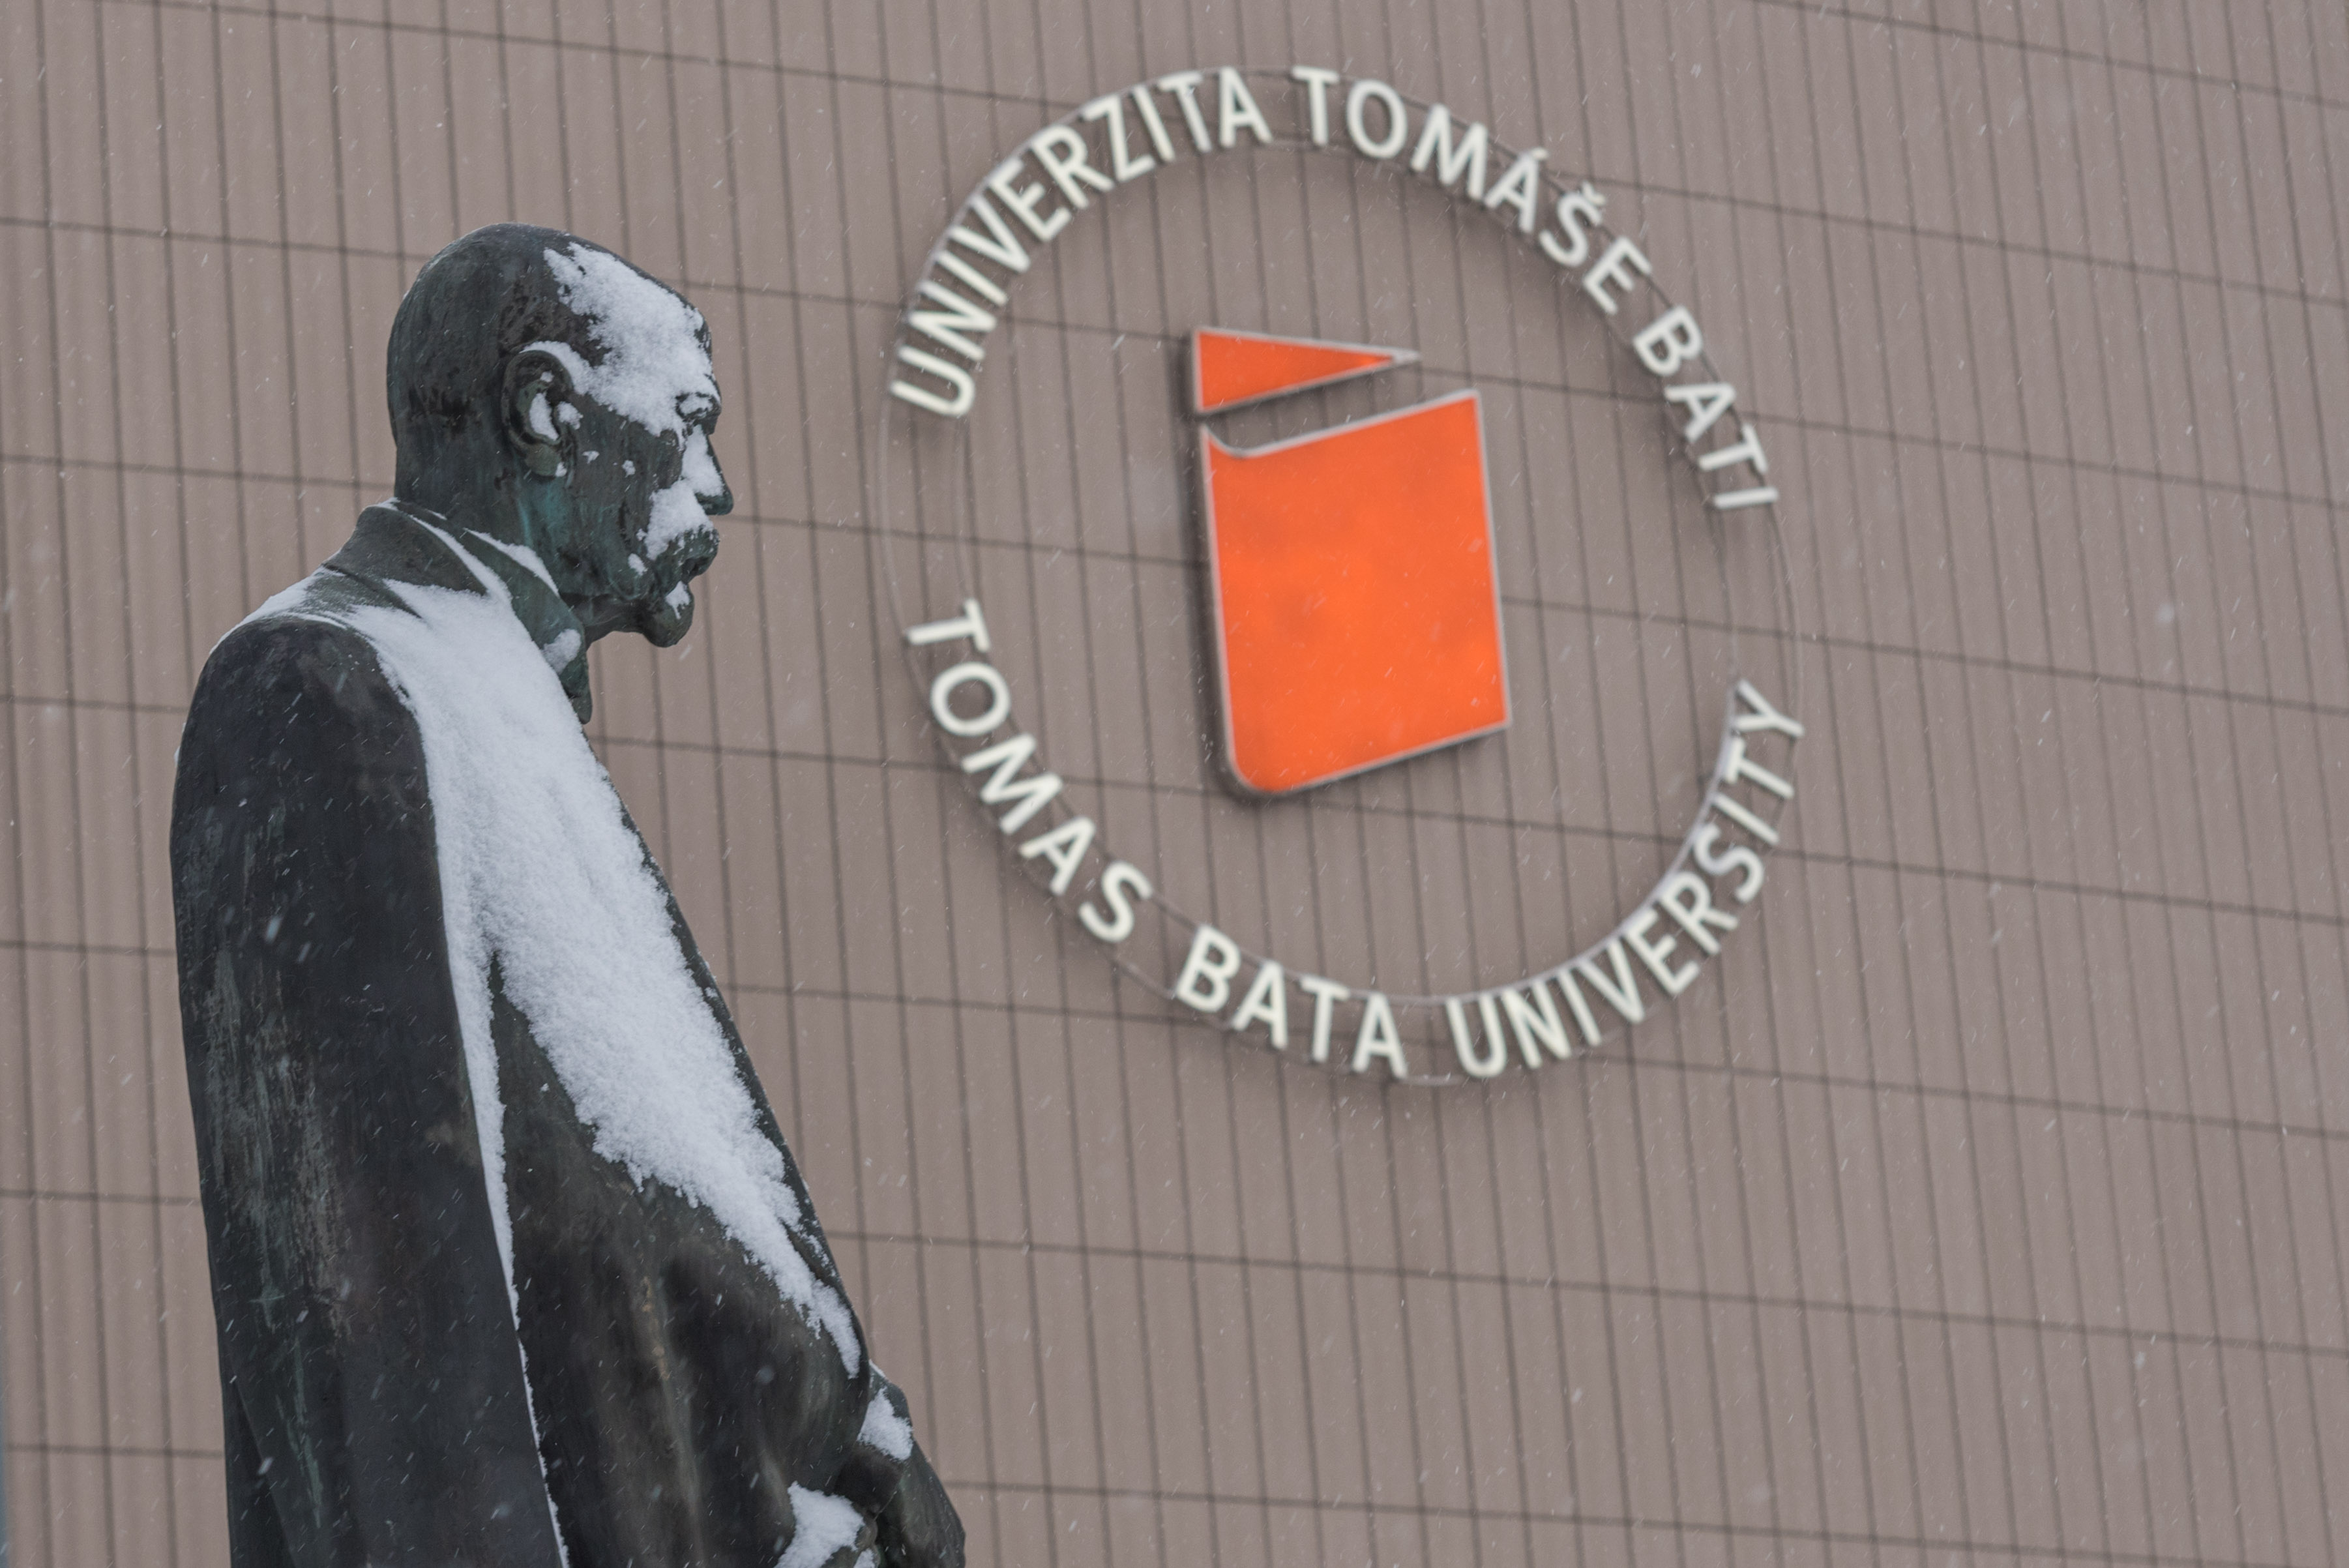 Thomas Bata university2